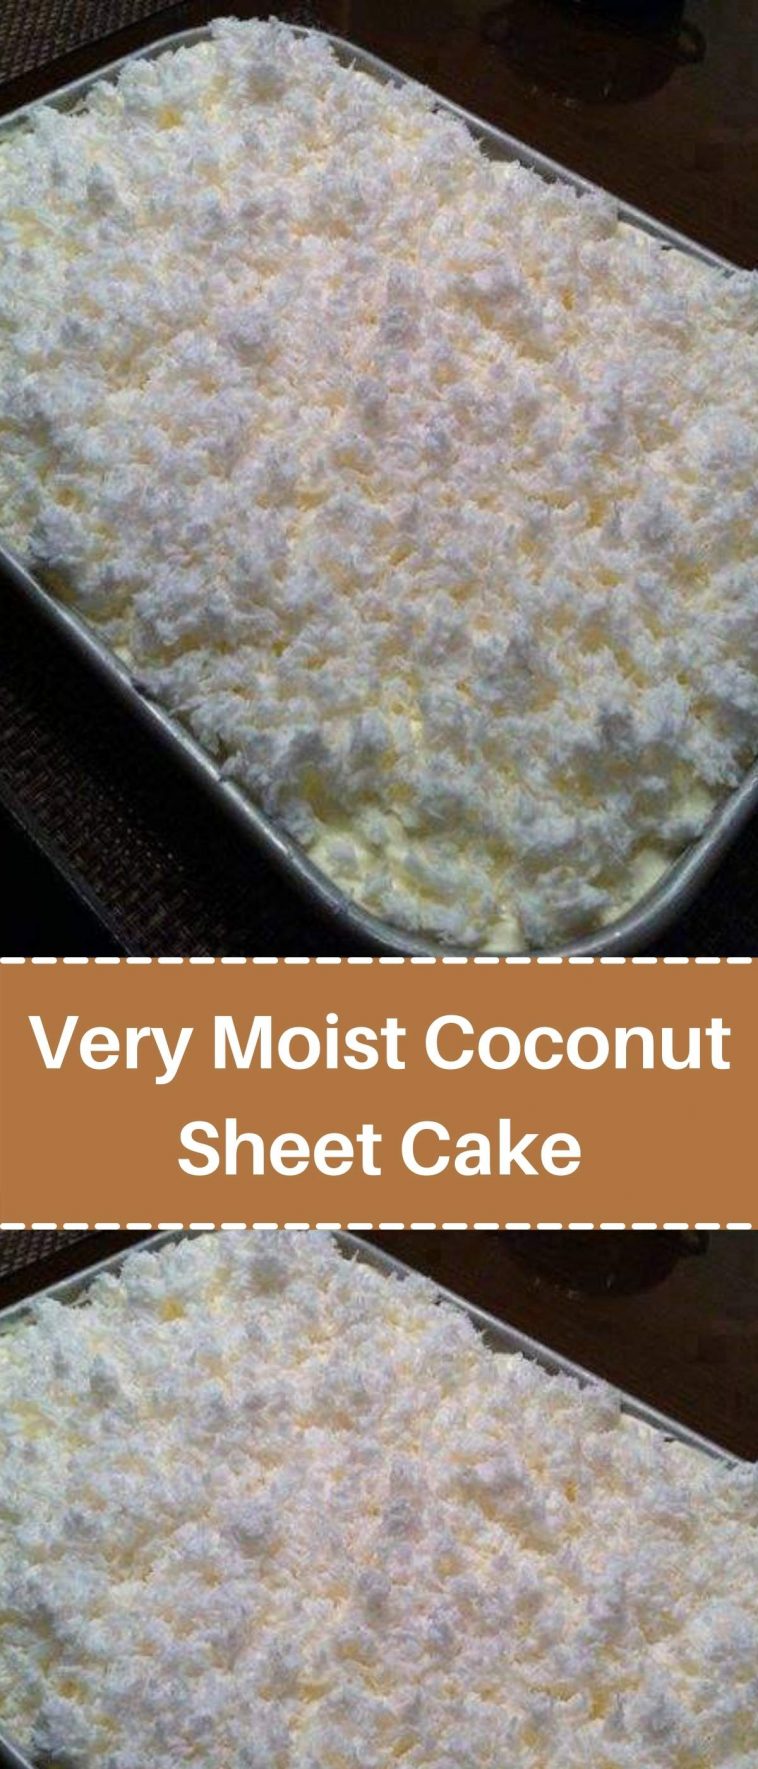 Very Moist Coconut Sheet Cake